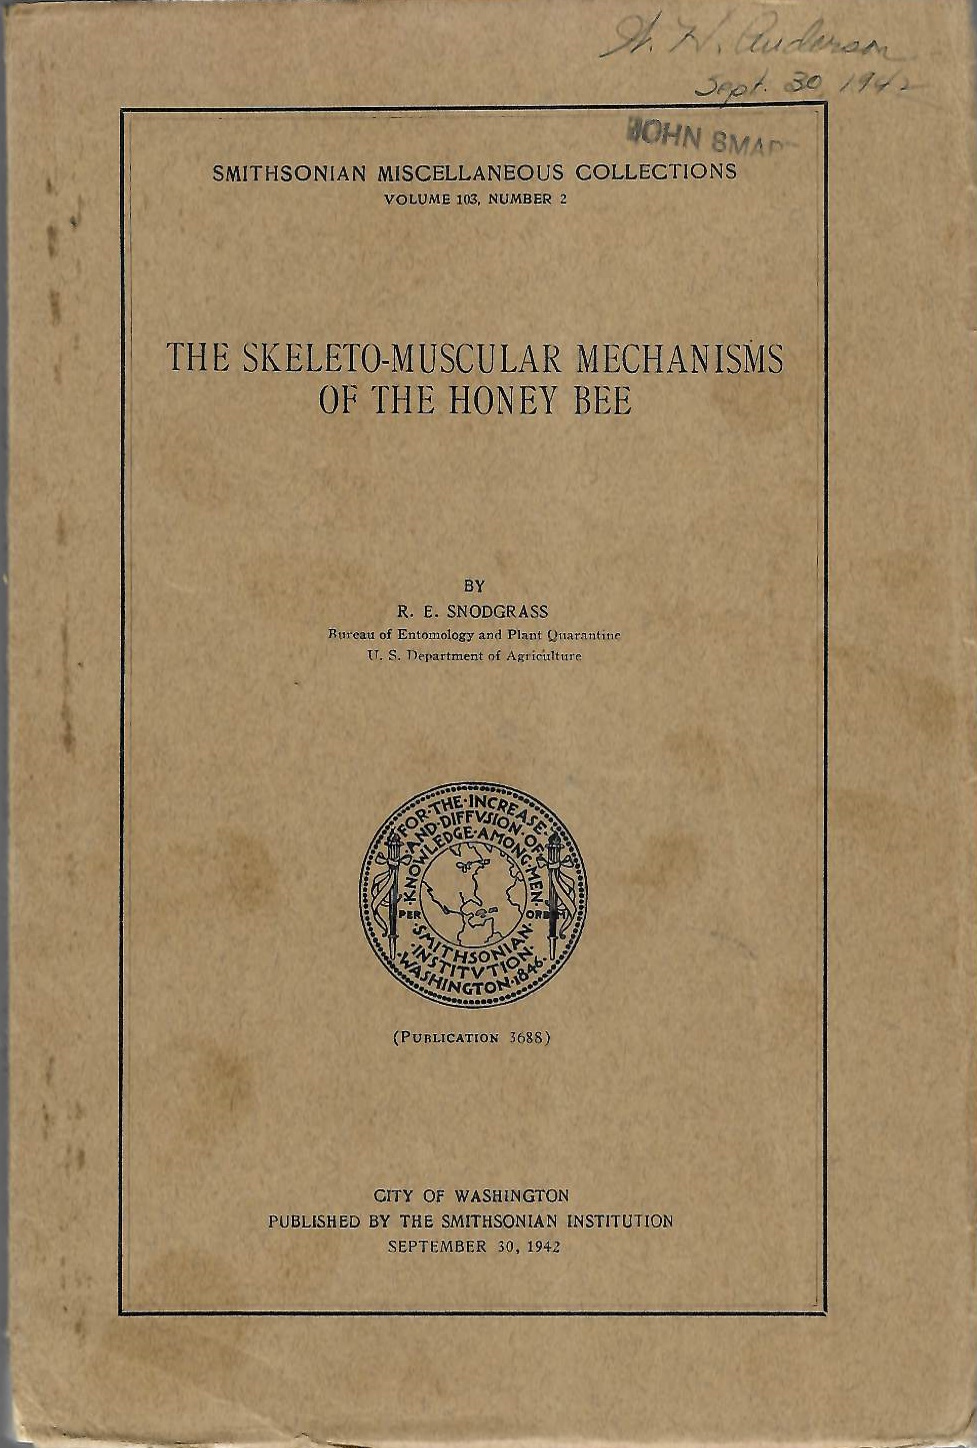 Snodgrass, R.E. - The Skeleto-Muscular Mechanisms of the Honey Bee